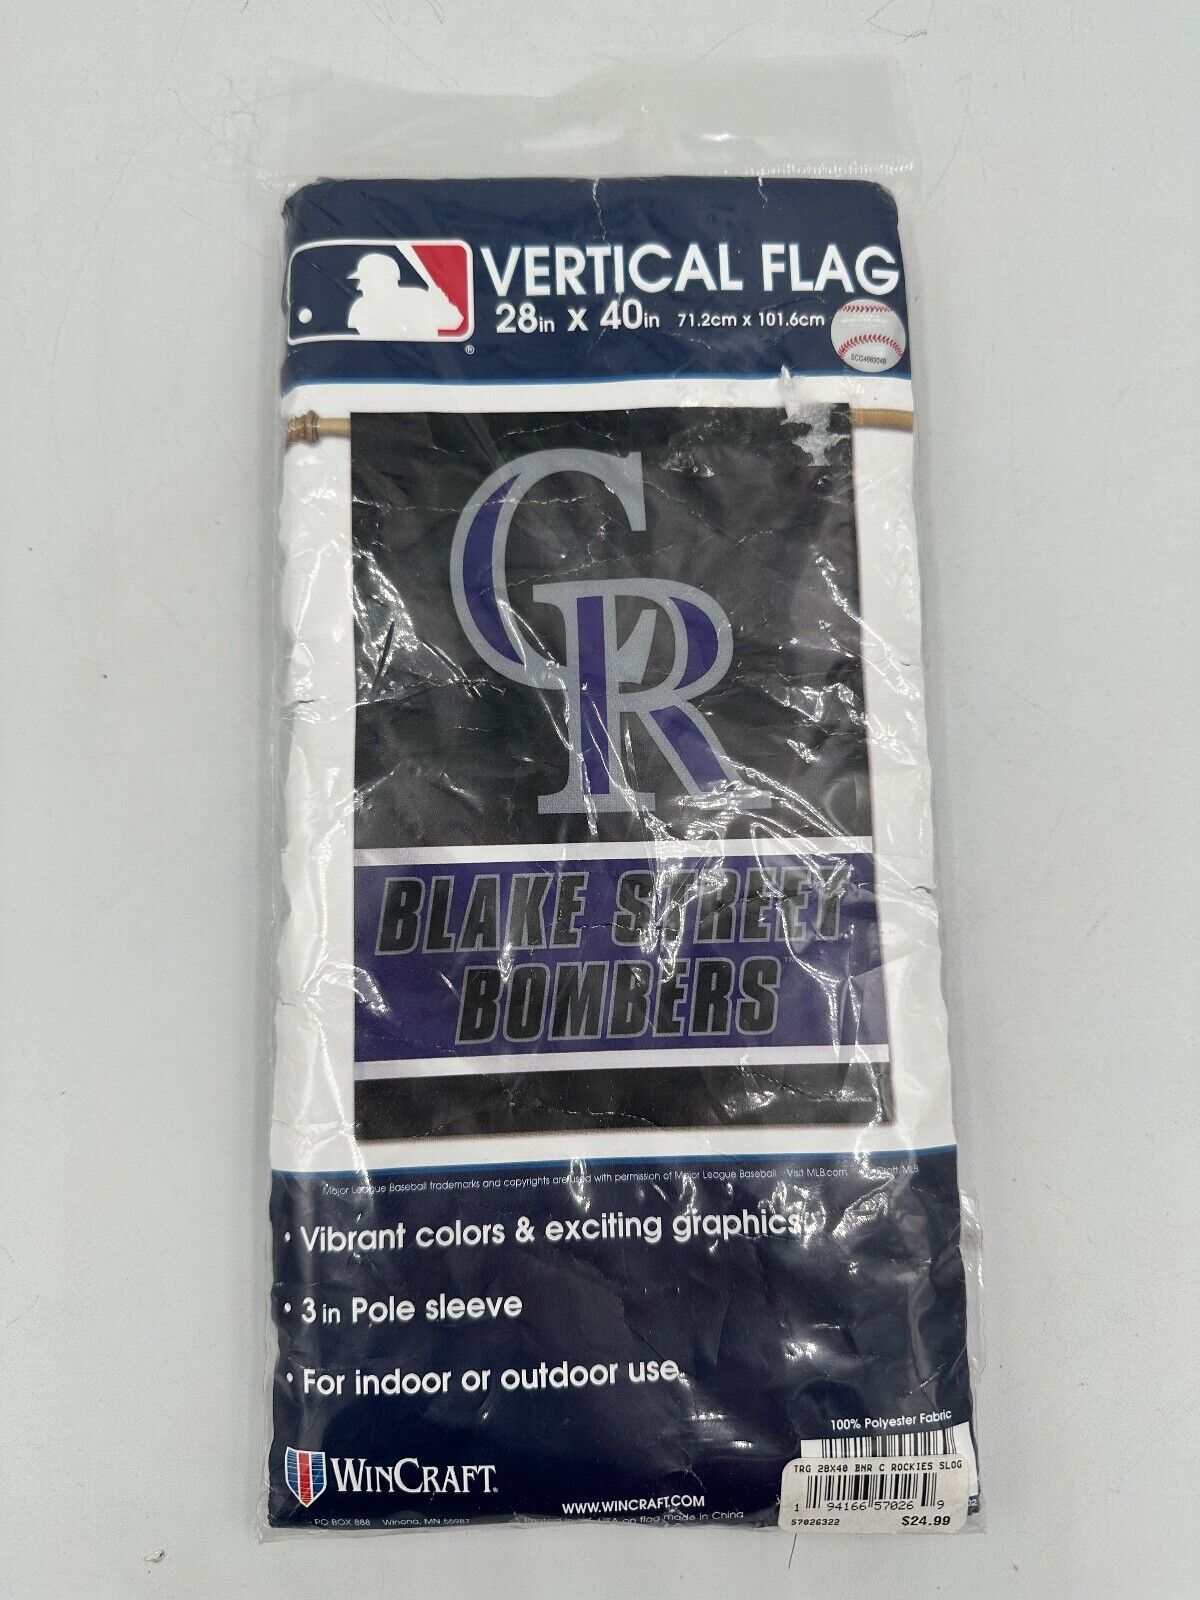 WINCRAFT COLORADO ROCKIES VERTICAL FLAG BLAKE STREET BOMBERS MLB 28x40 - $24.18